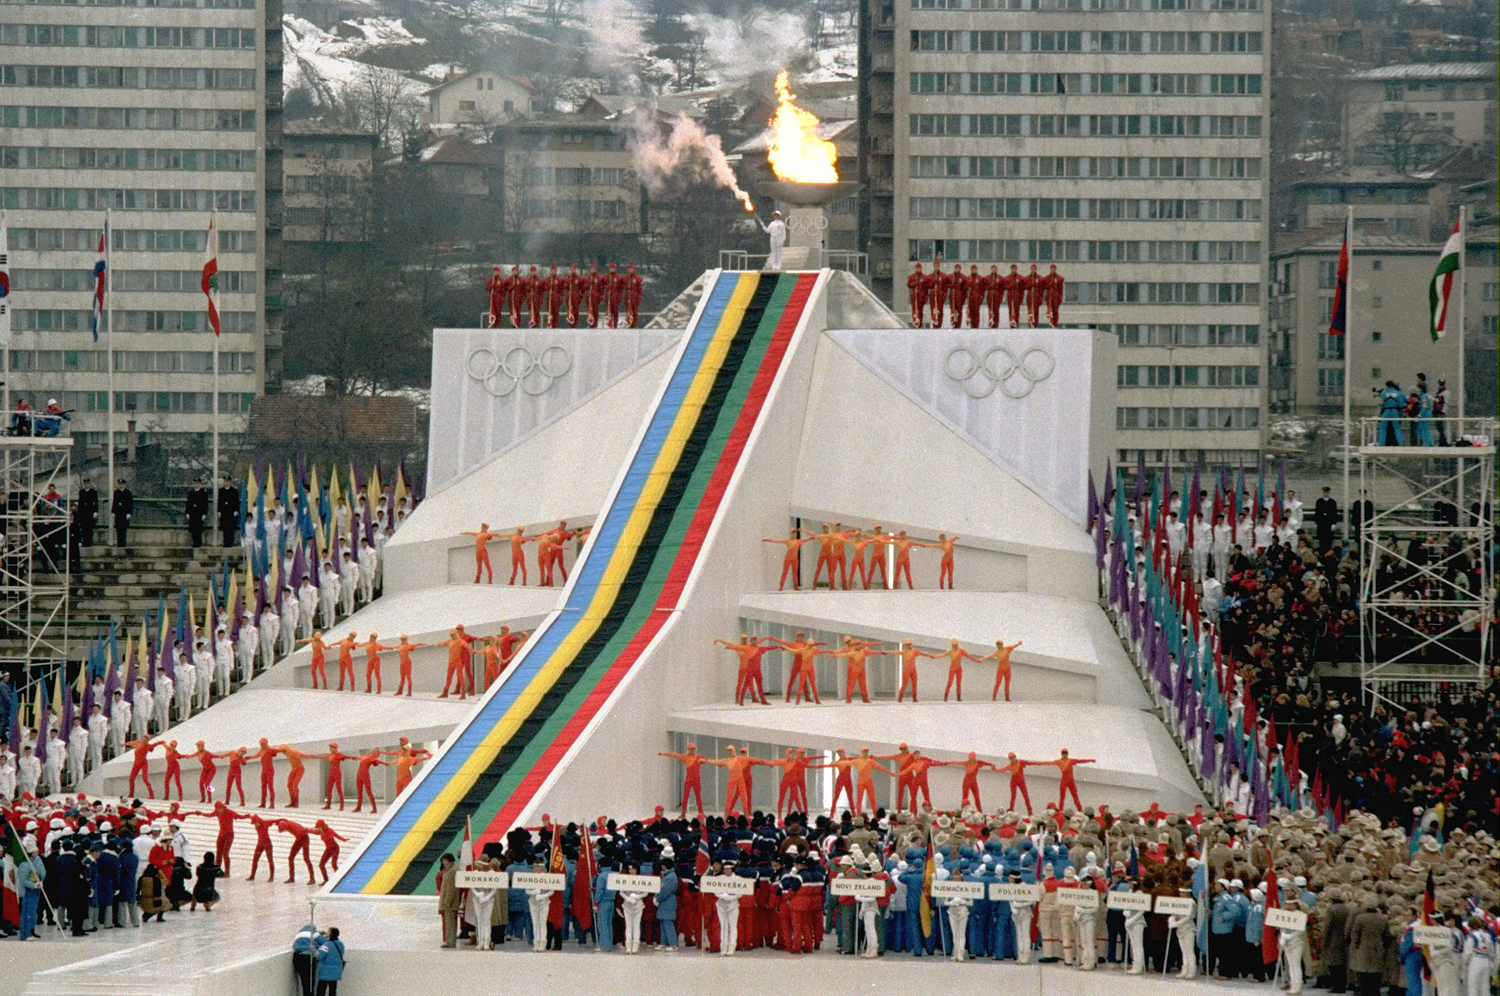 Opening ceremonies take place for the XIV Winter Olympics in Sarajevo's Kosevo stadium Feb. 8, 1984.  (AP Photo)